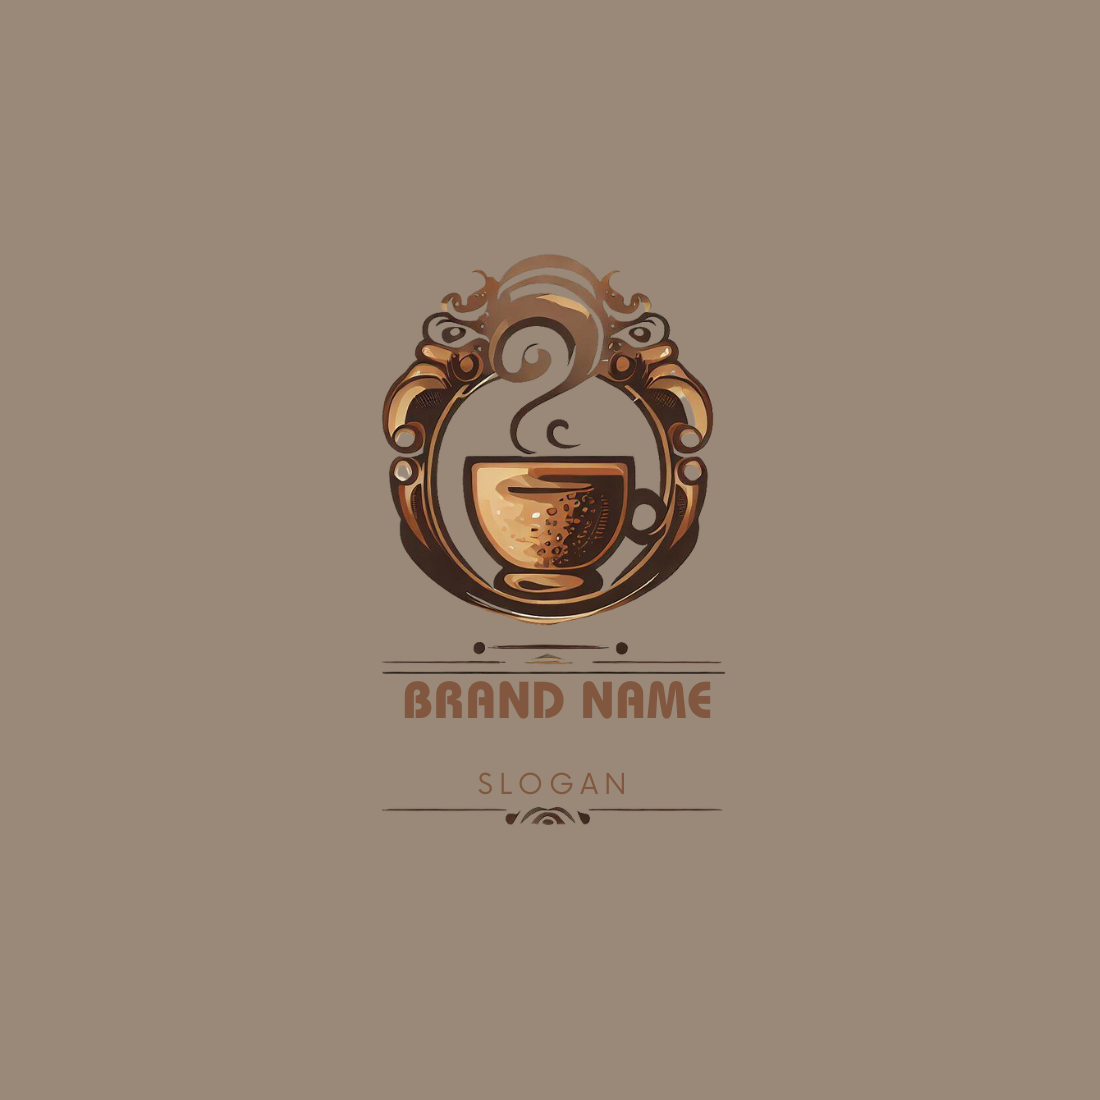 Coffee Logos - 2494+ Best Coffee Logo Ideas. Free Coffee Logo Maker. |  99designs